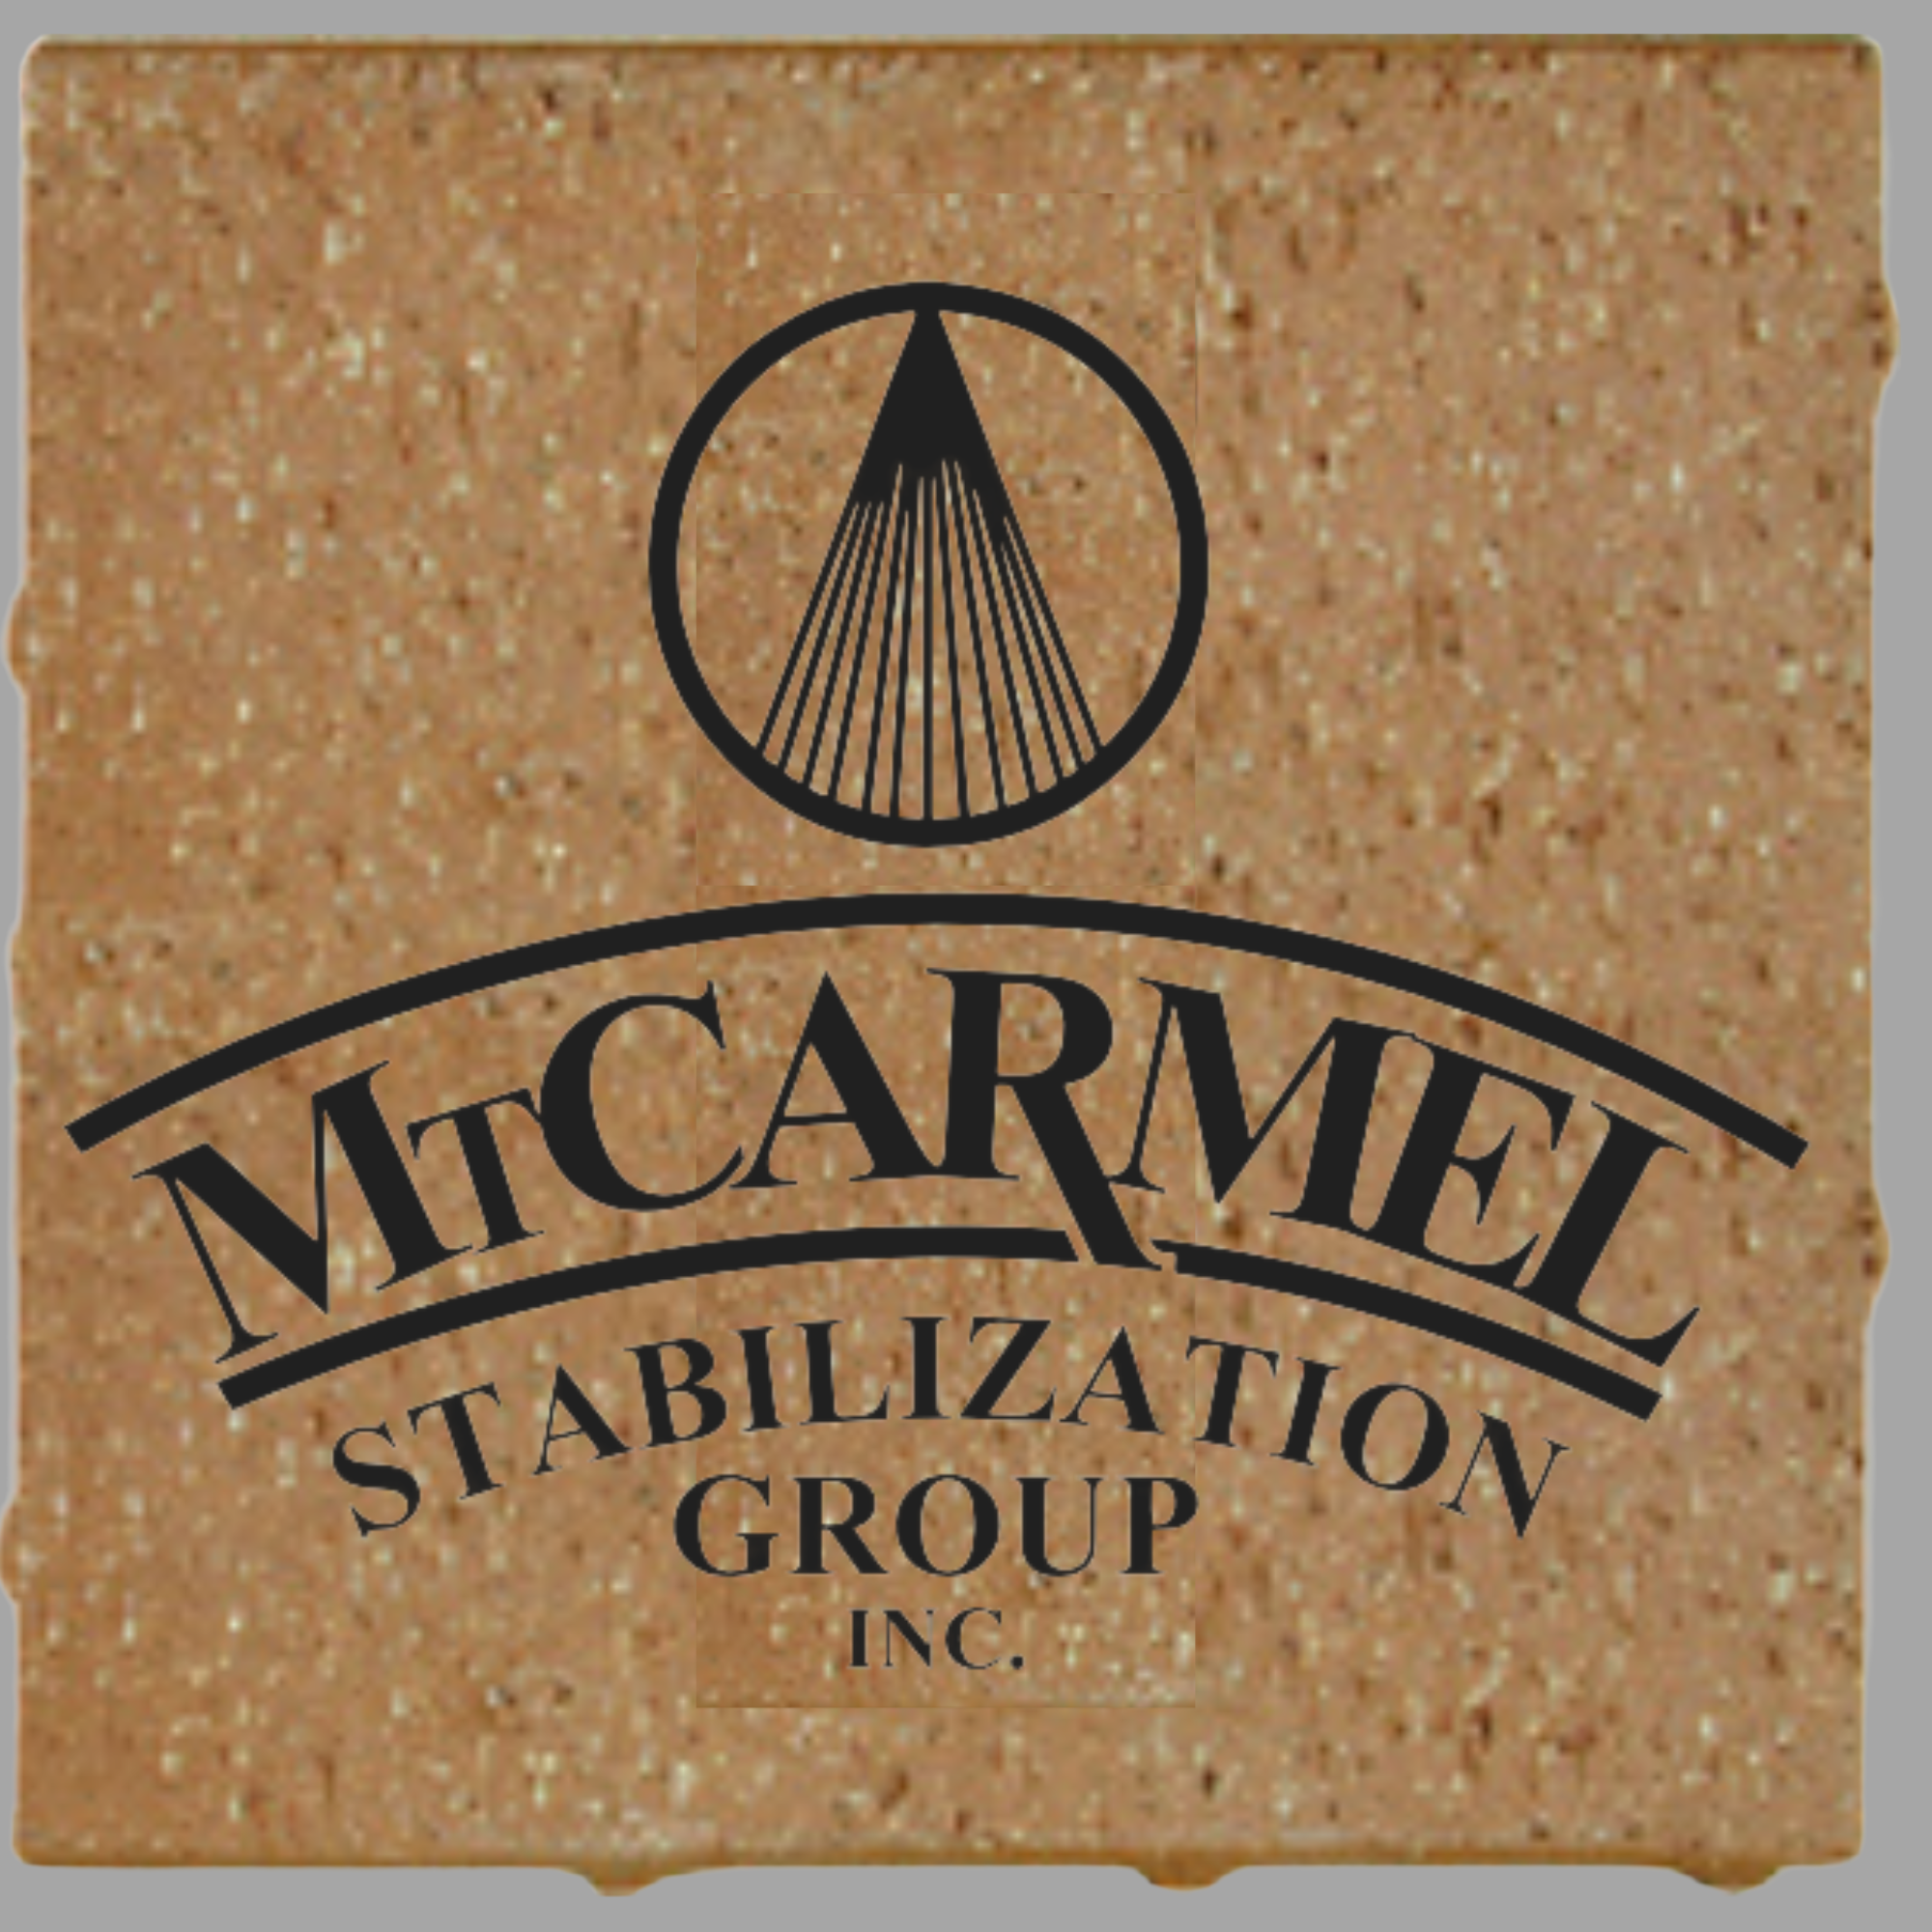 Mt. Carmel Stabilization Group, Inc.